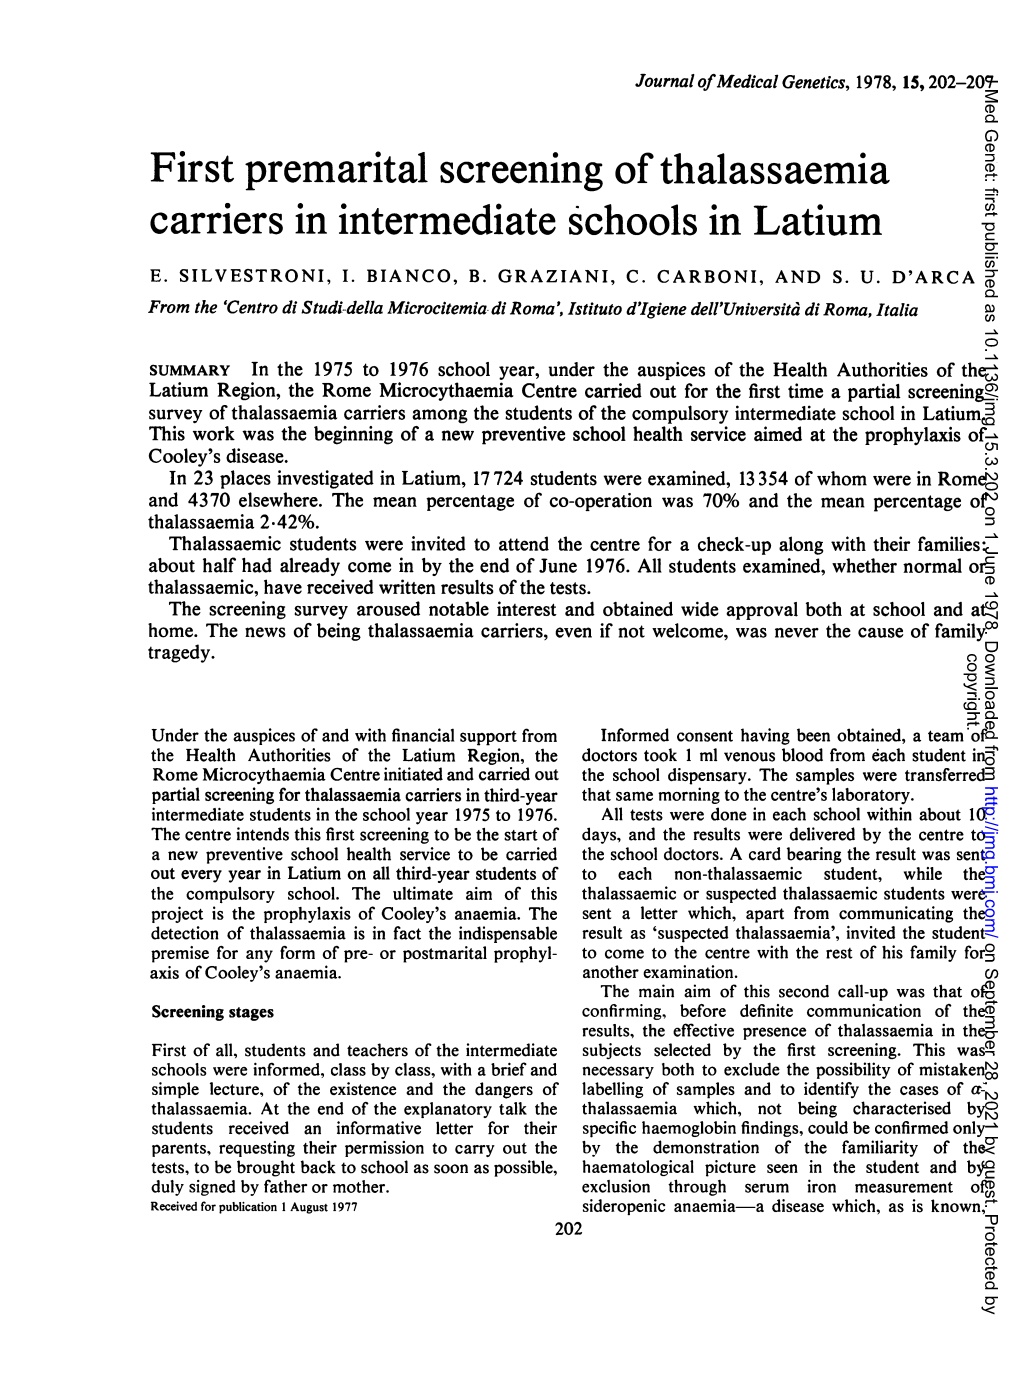 First Premarital Screening of Thalassaemia Carriers in Intermediate Schools in Latium